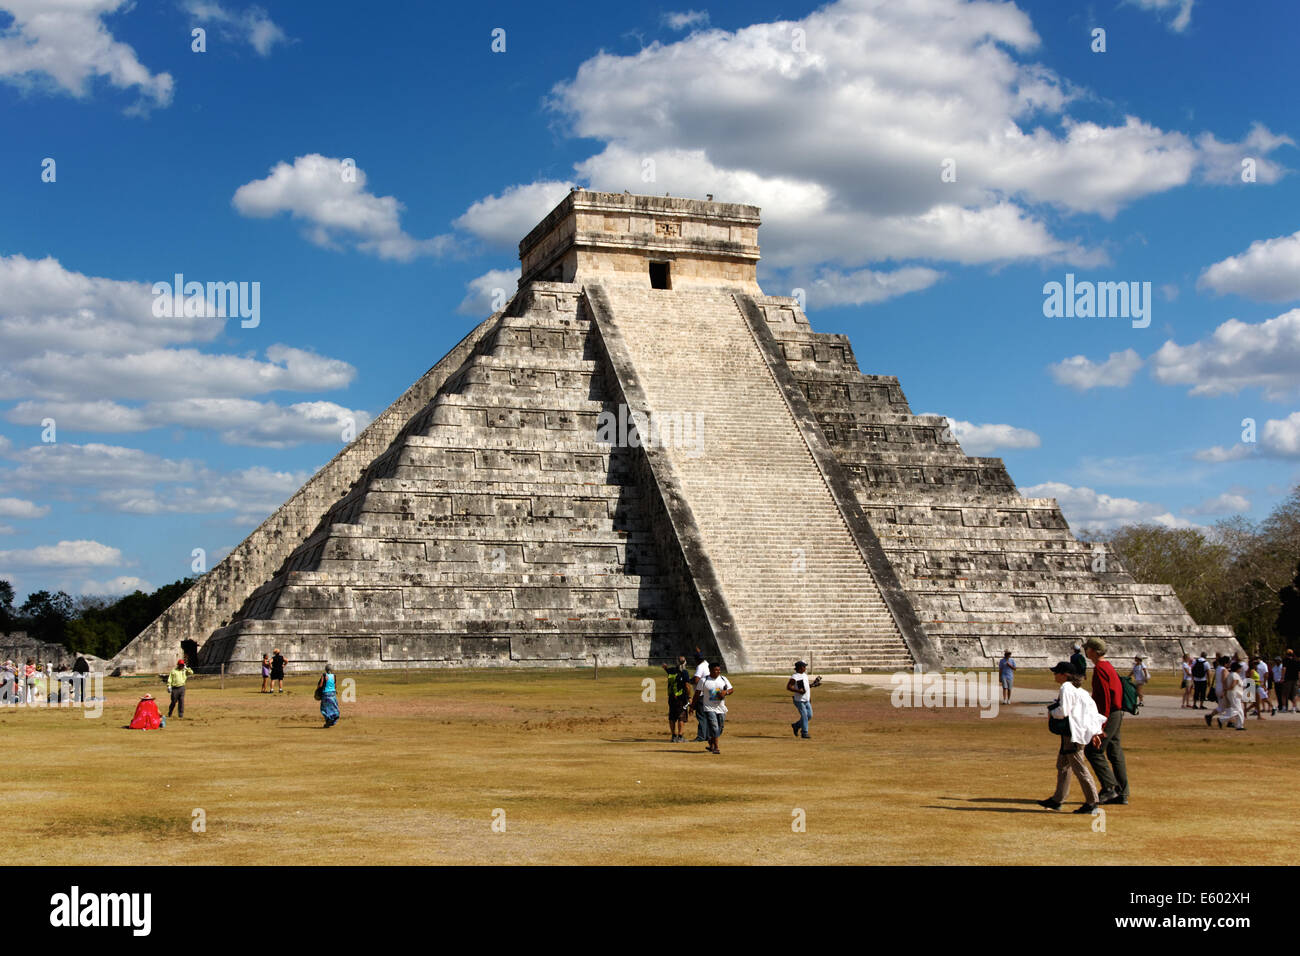 Mayan temple pyramid El Castillo in Chichen Itza, Yucatan, Mexico. Stock Photo